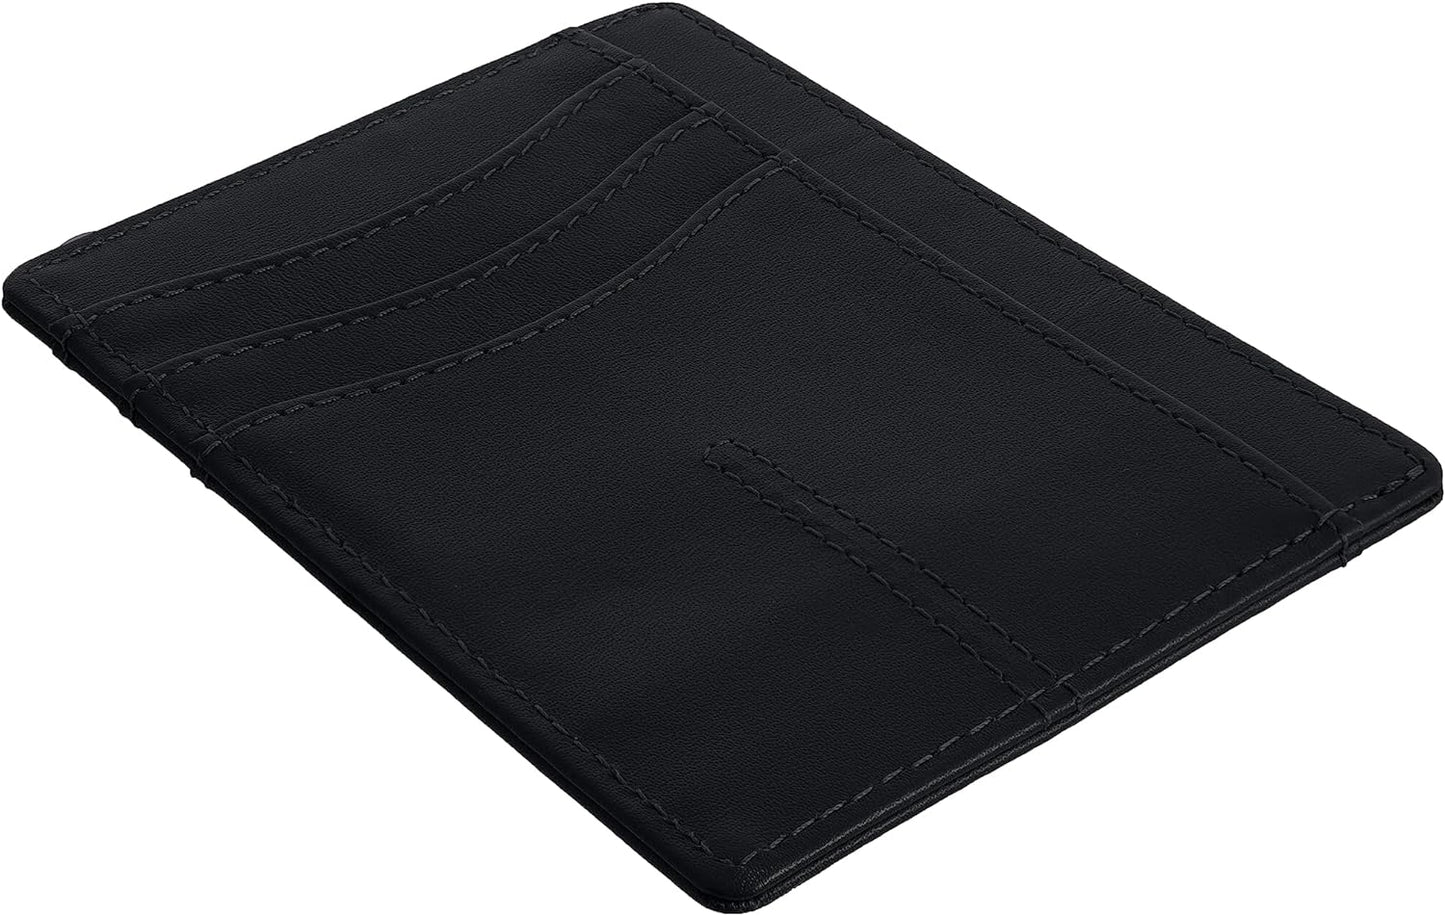 HeedFull - AirTag Wallet - Genuine Leather, Slim Design